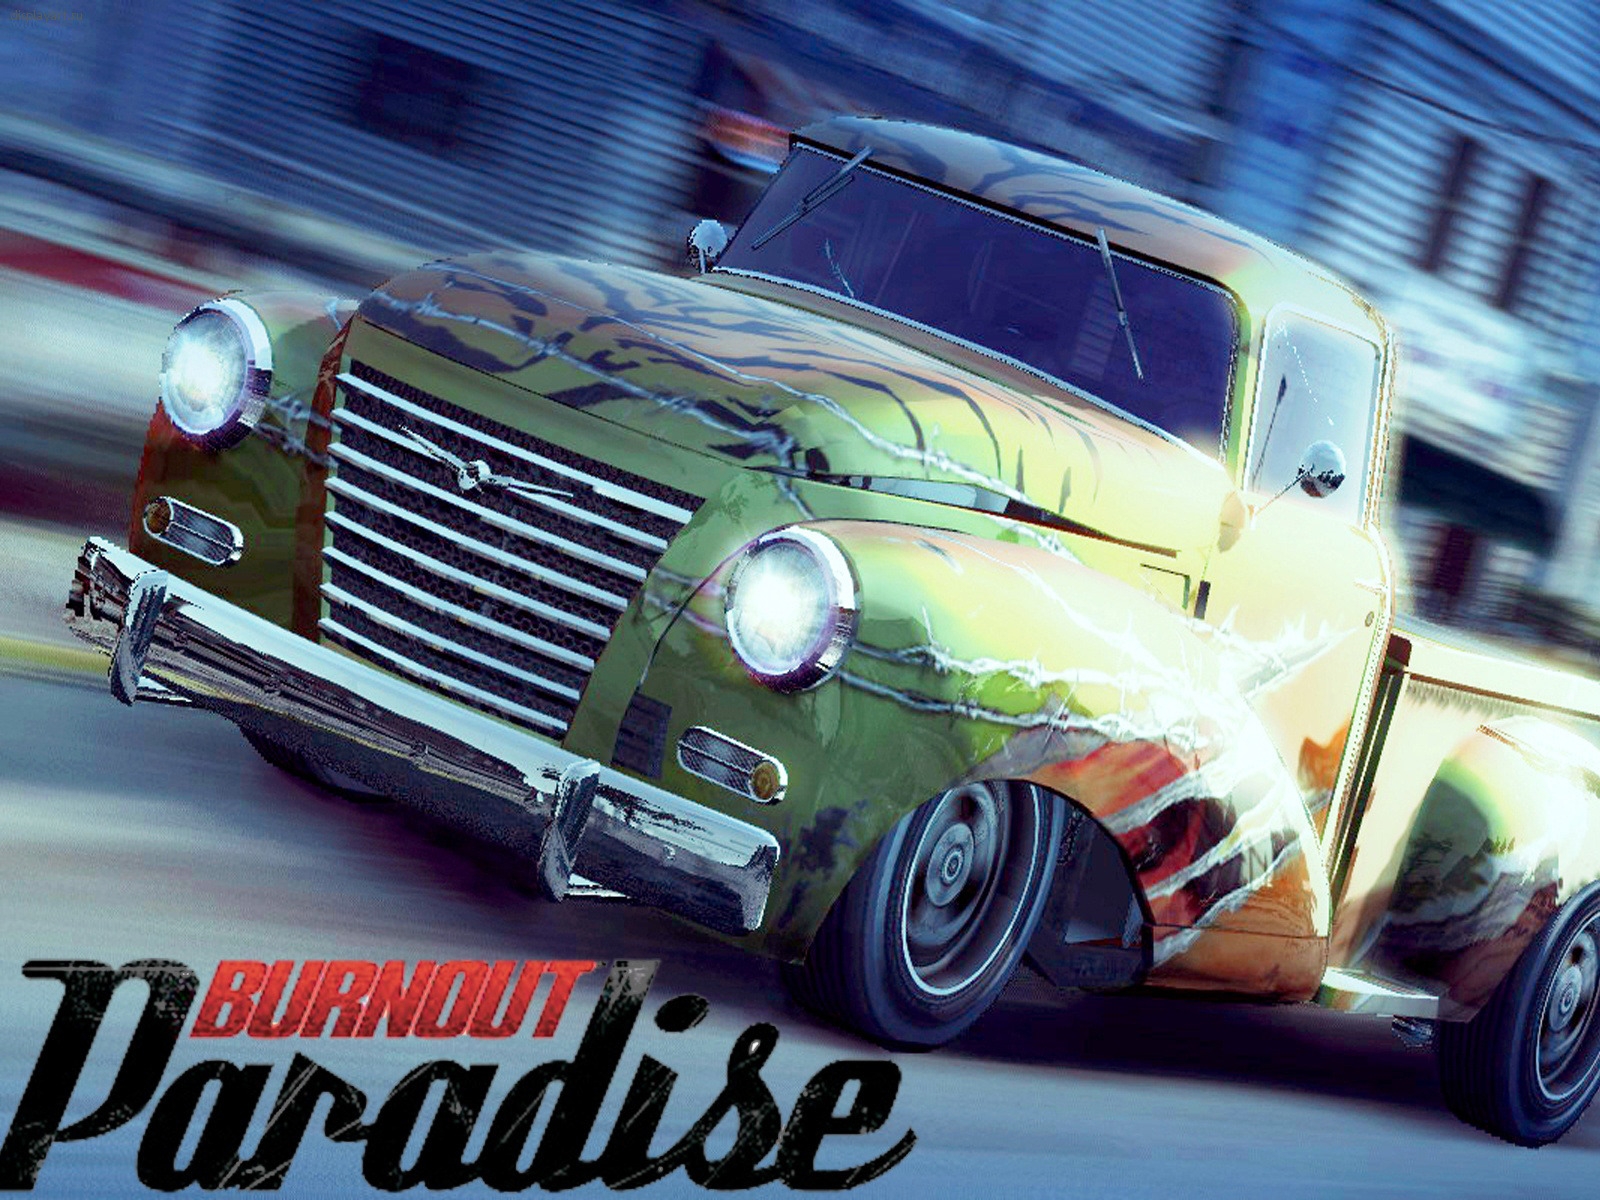 Burnout Paradise Car for 1600 x 1200 resolution